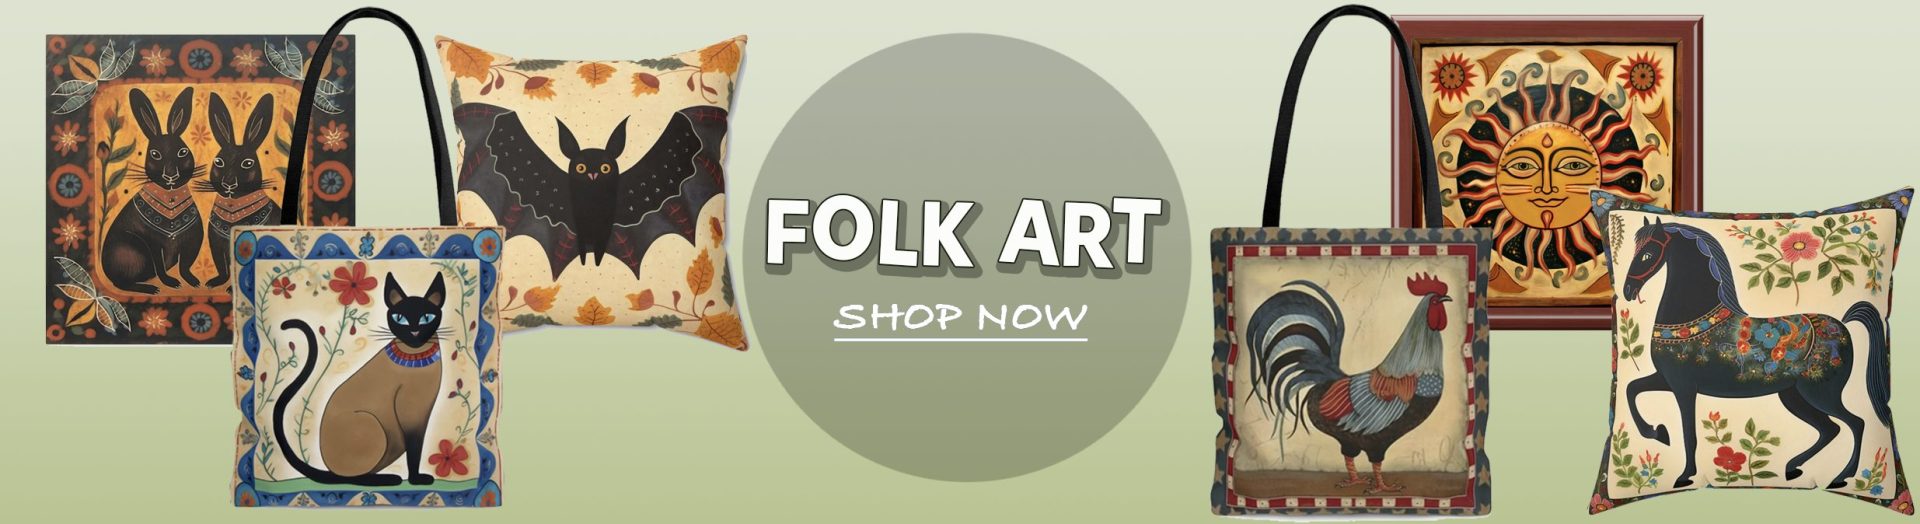 Category folk art - Mowbi Brand Gifts